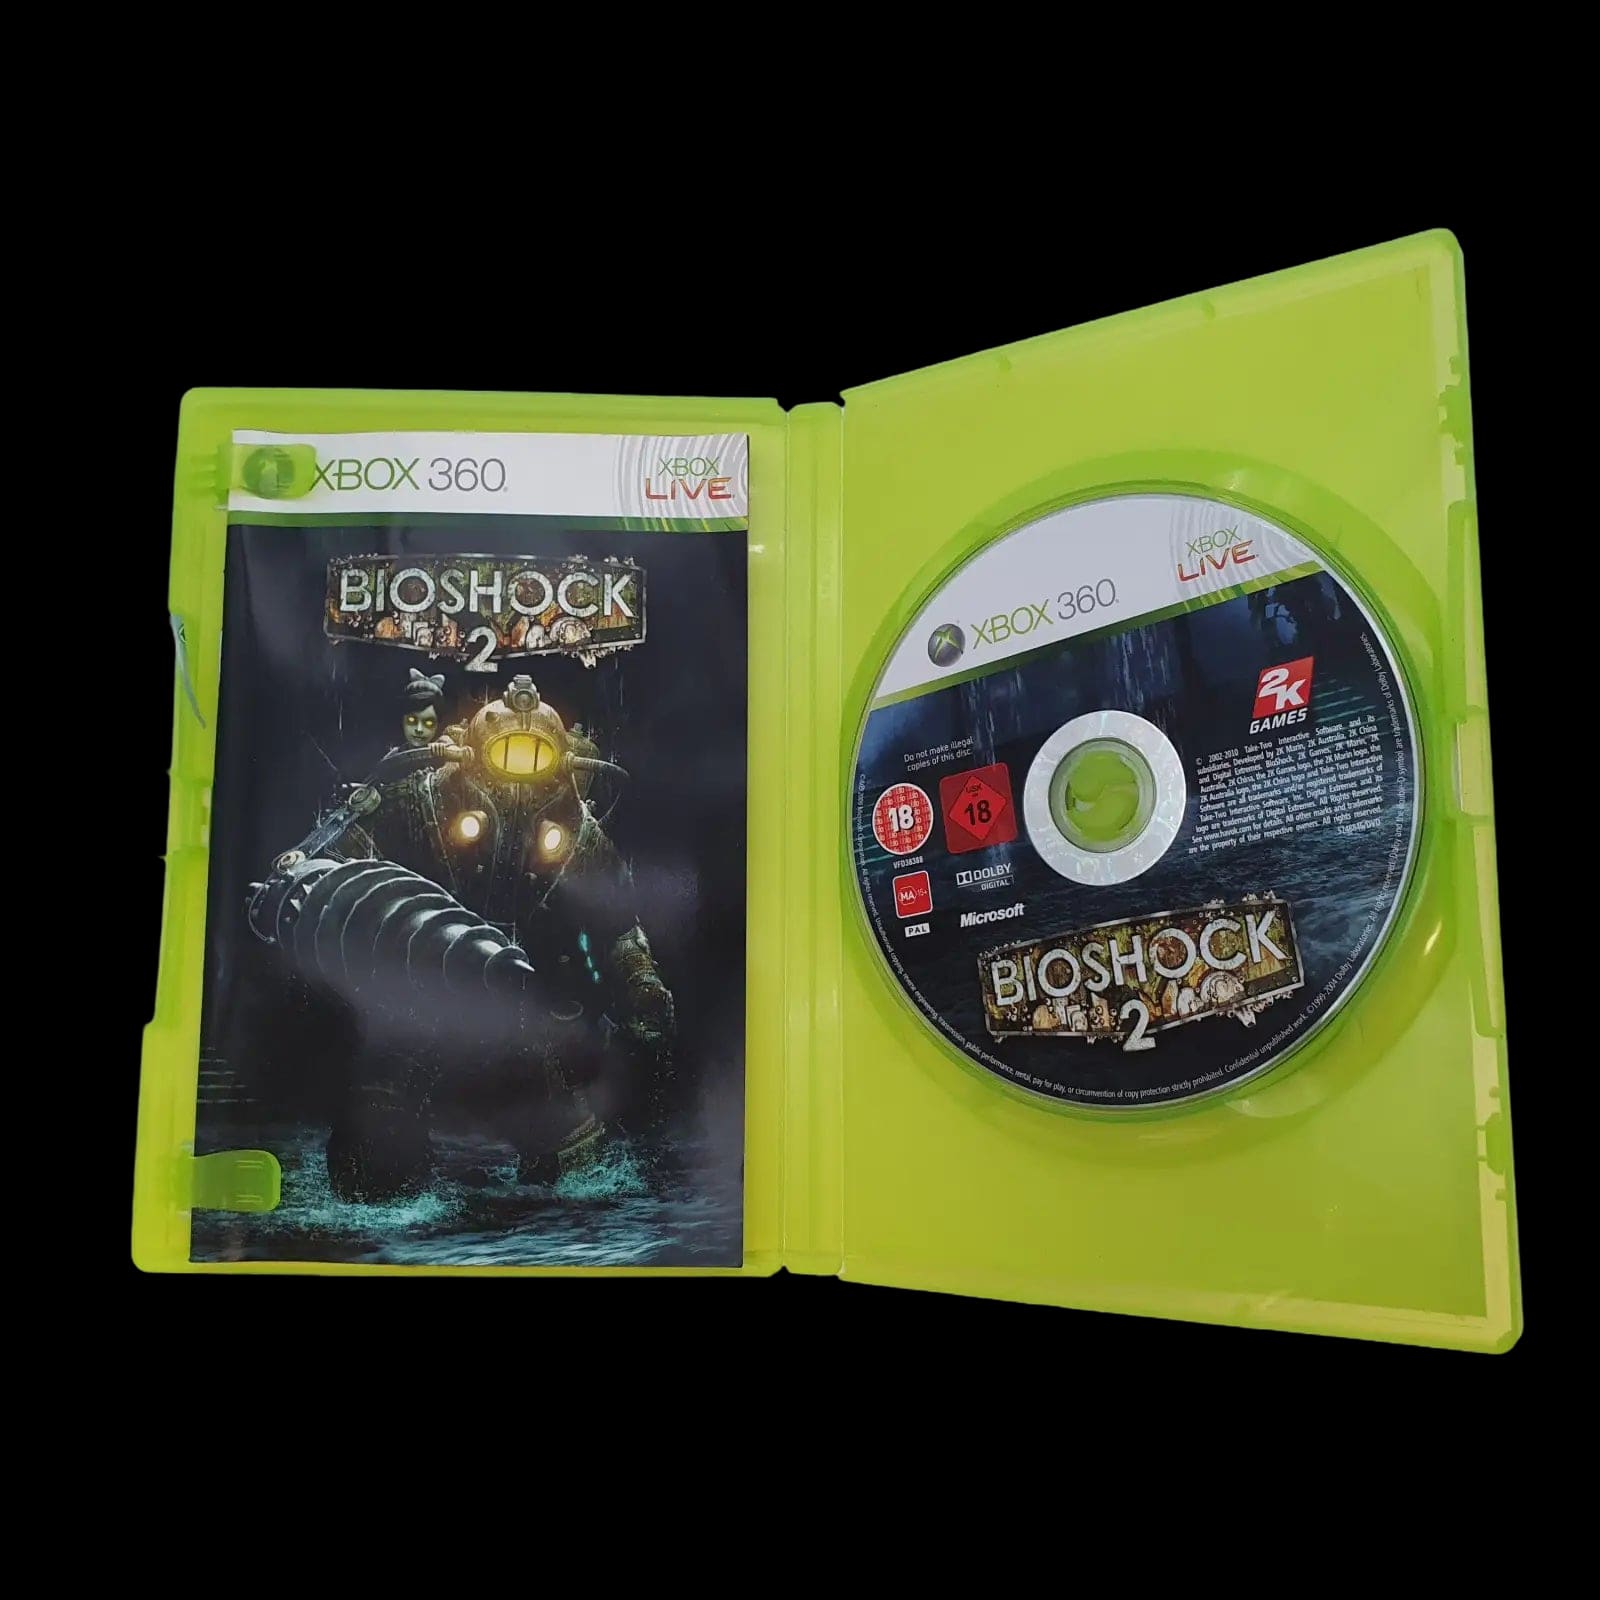 Bioshock 2 Microsoft Xbox 360 2k Games 2010 Video Game Cib